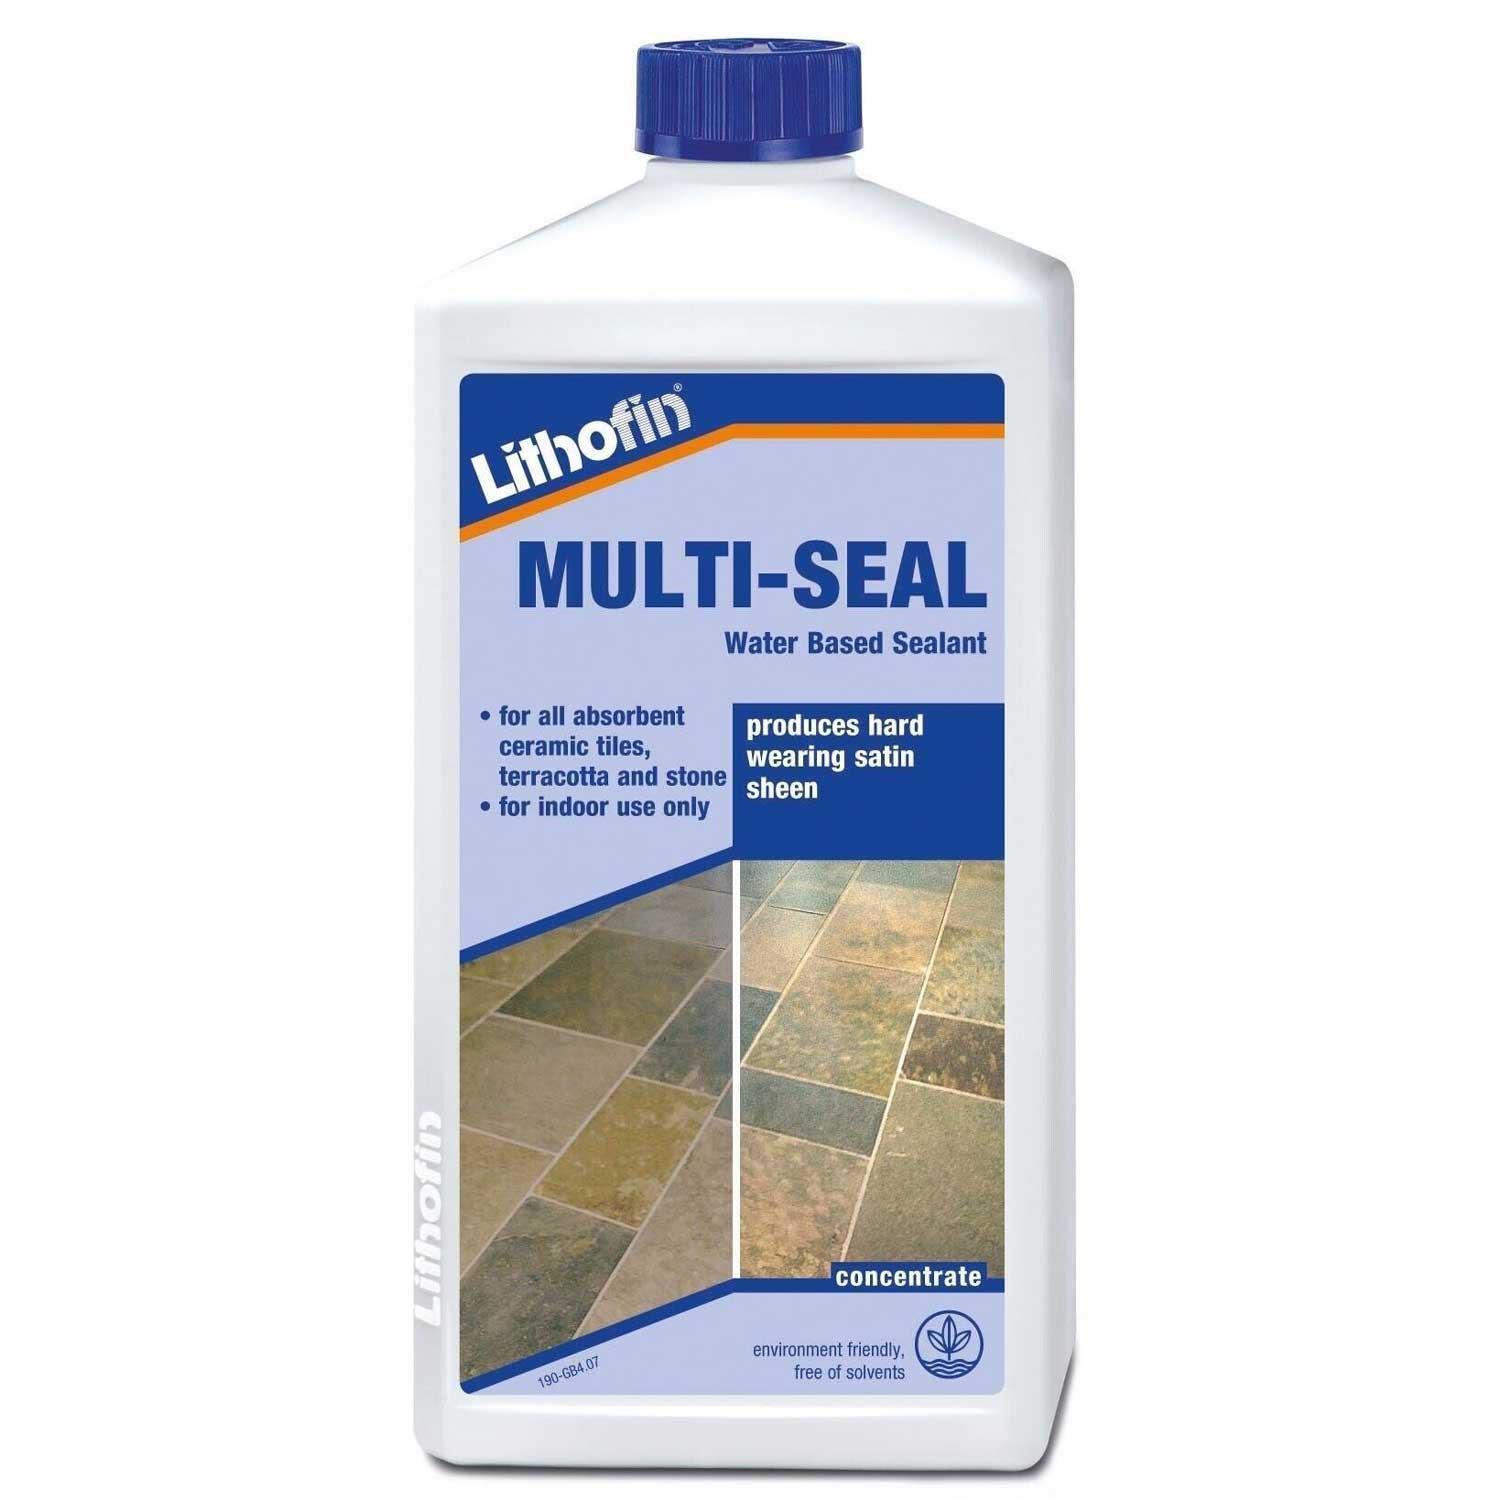 Lithofin Multi Seal Water Based Sealant 1L